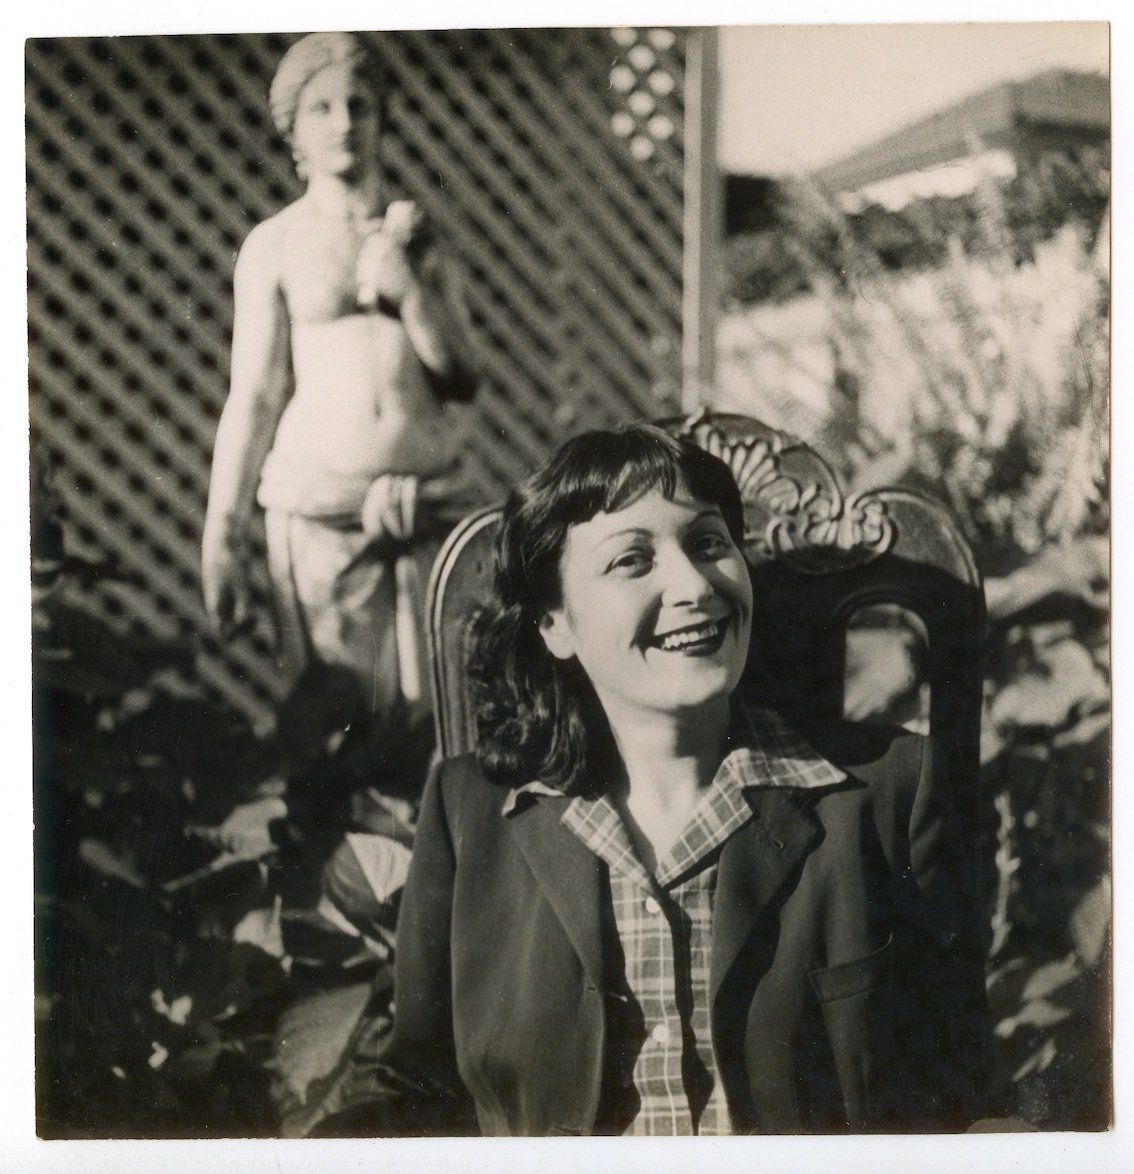 Portrait Lina Bo Bardi - photo by Pietro Bardi 1947 - courtesy of Instituto Bardi